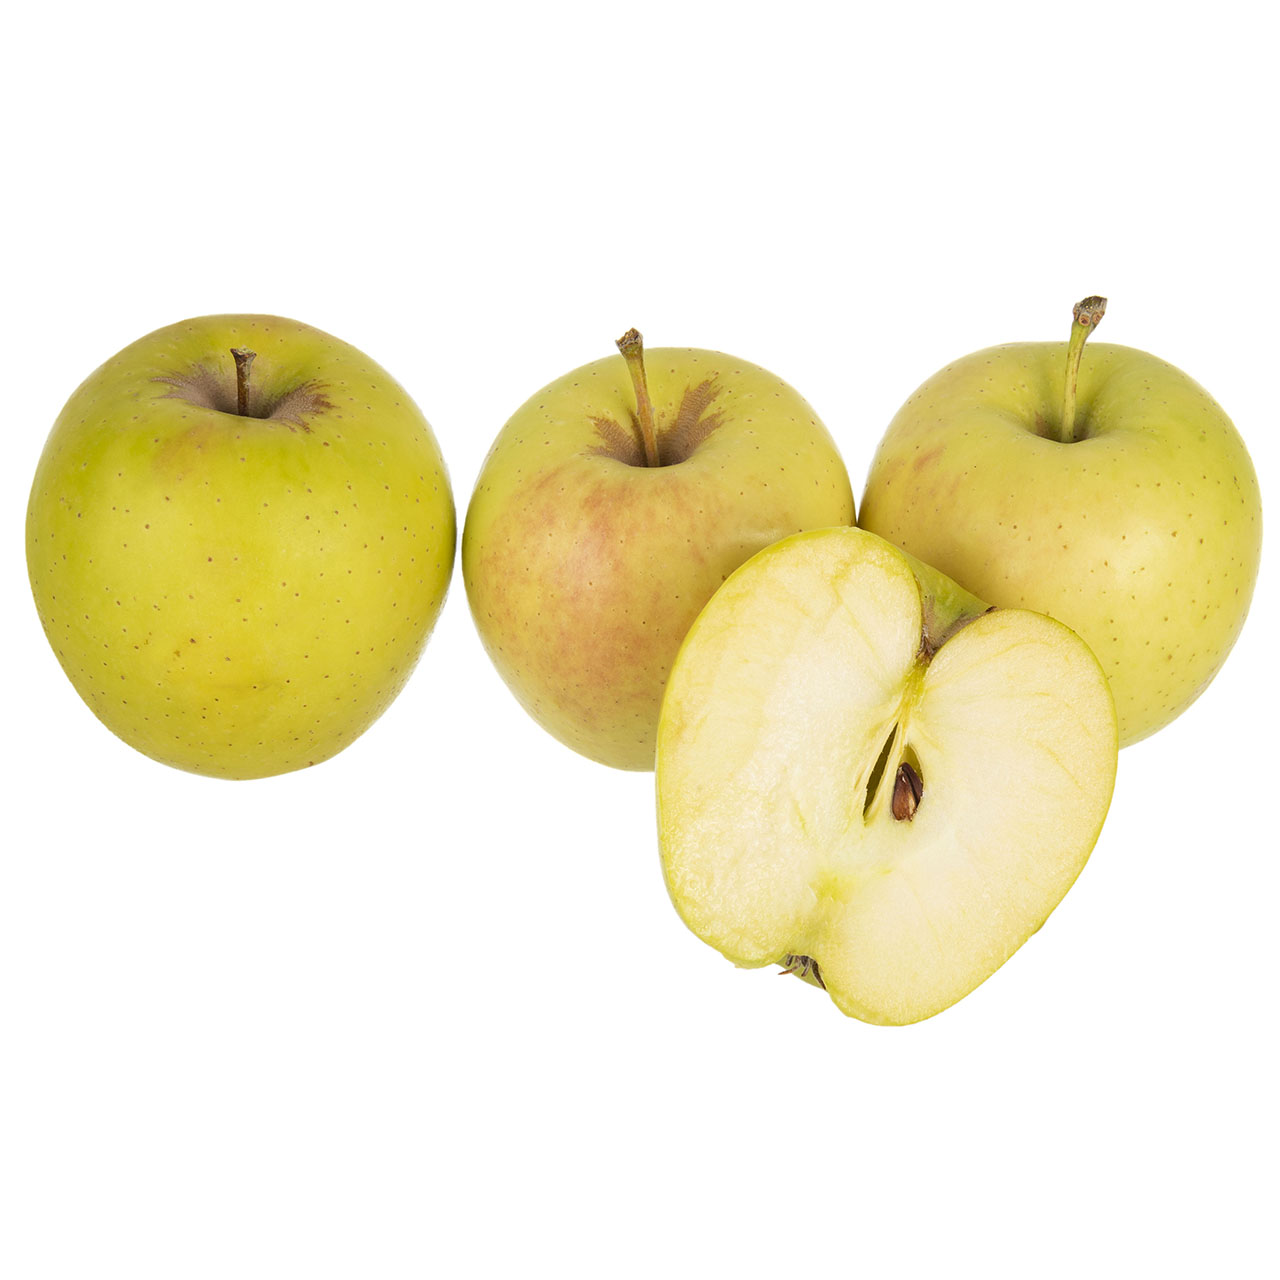 سیب زرد دماوند فله - 1 کیلوگرم